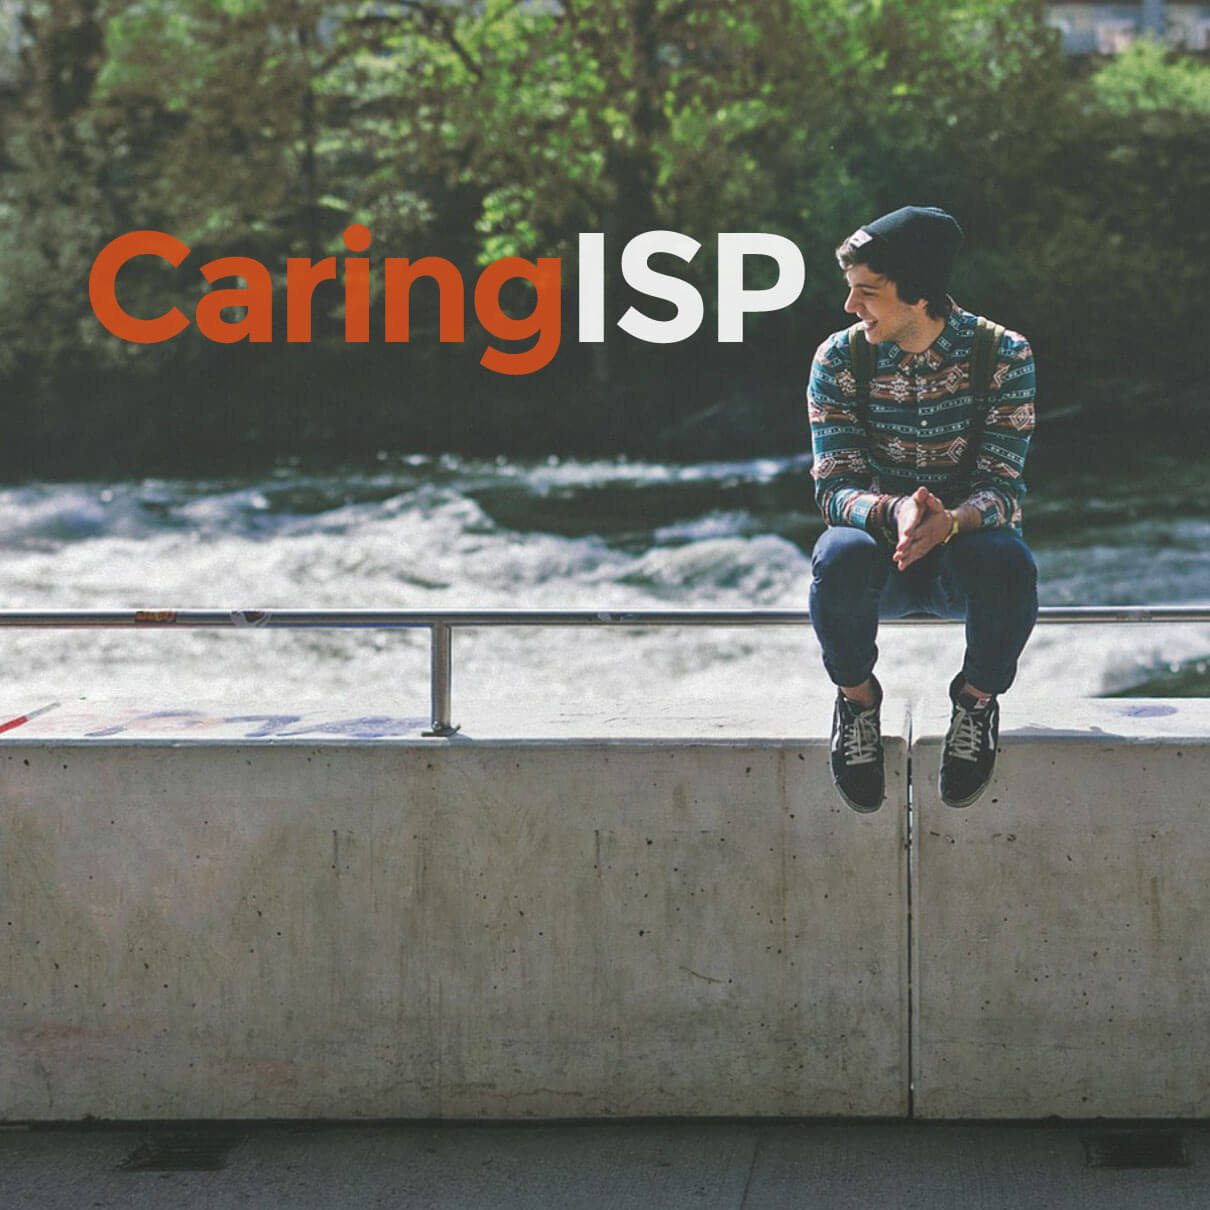 Caring ISP